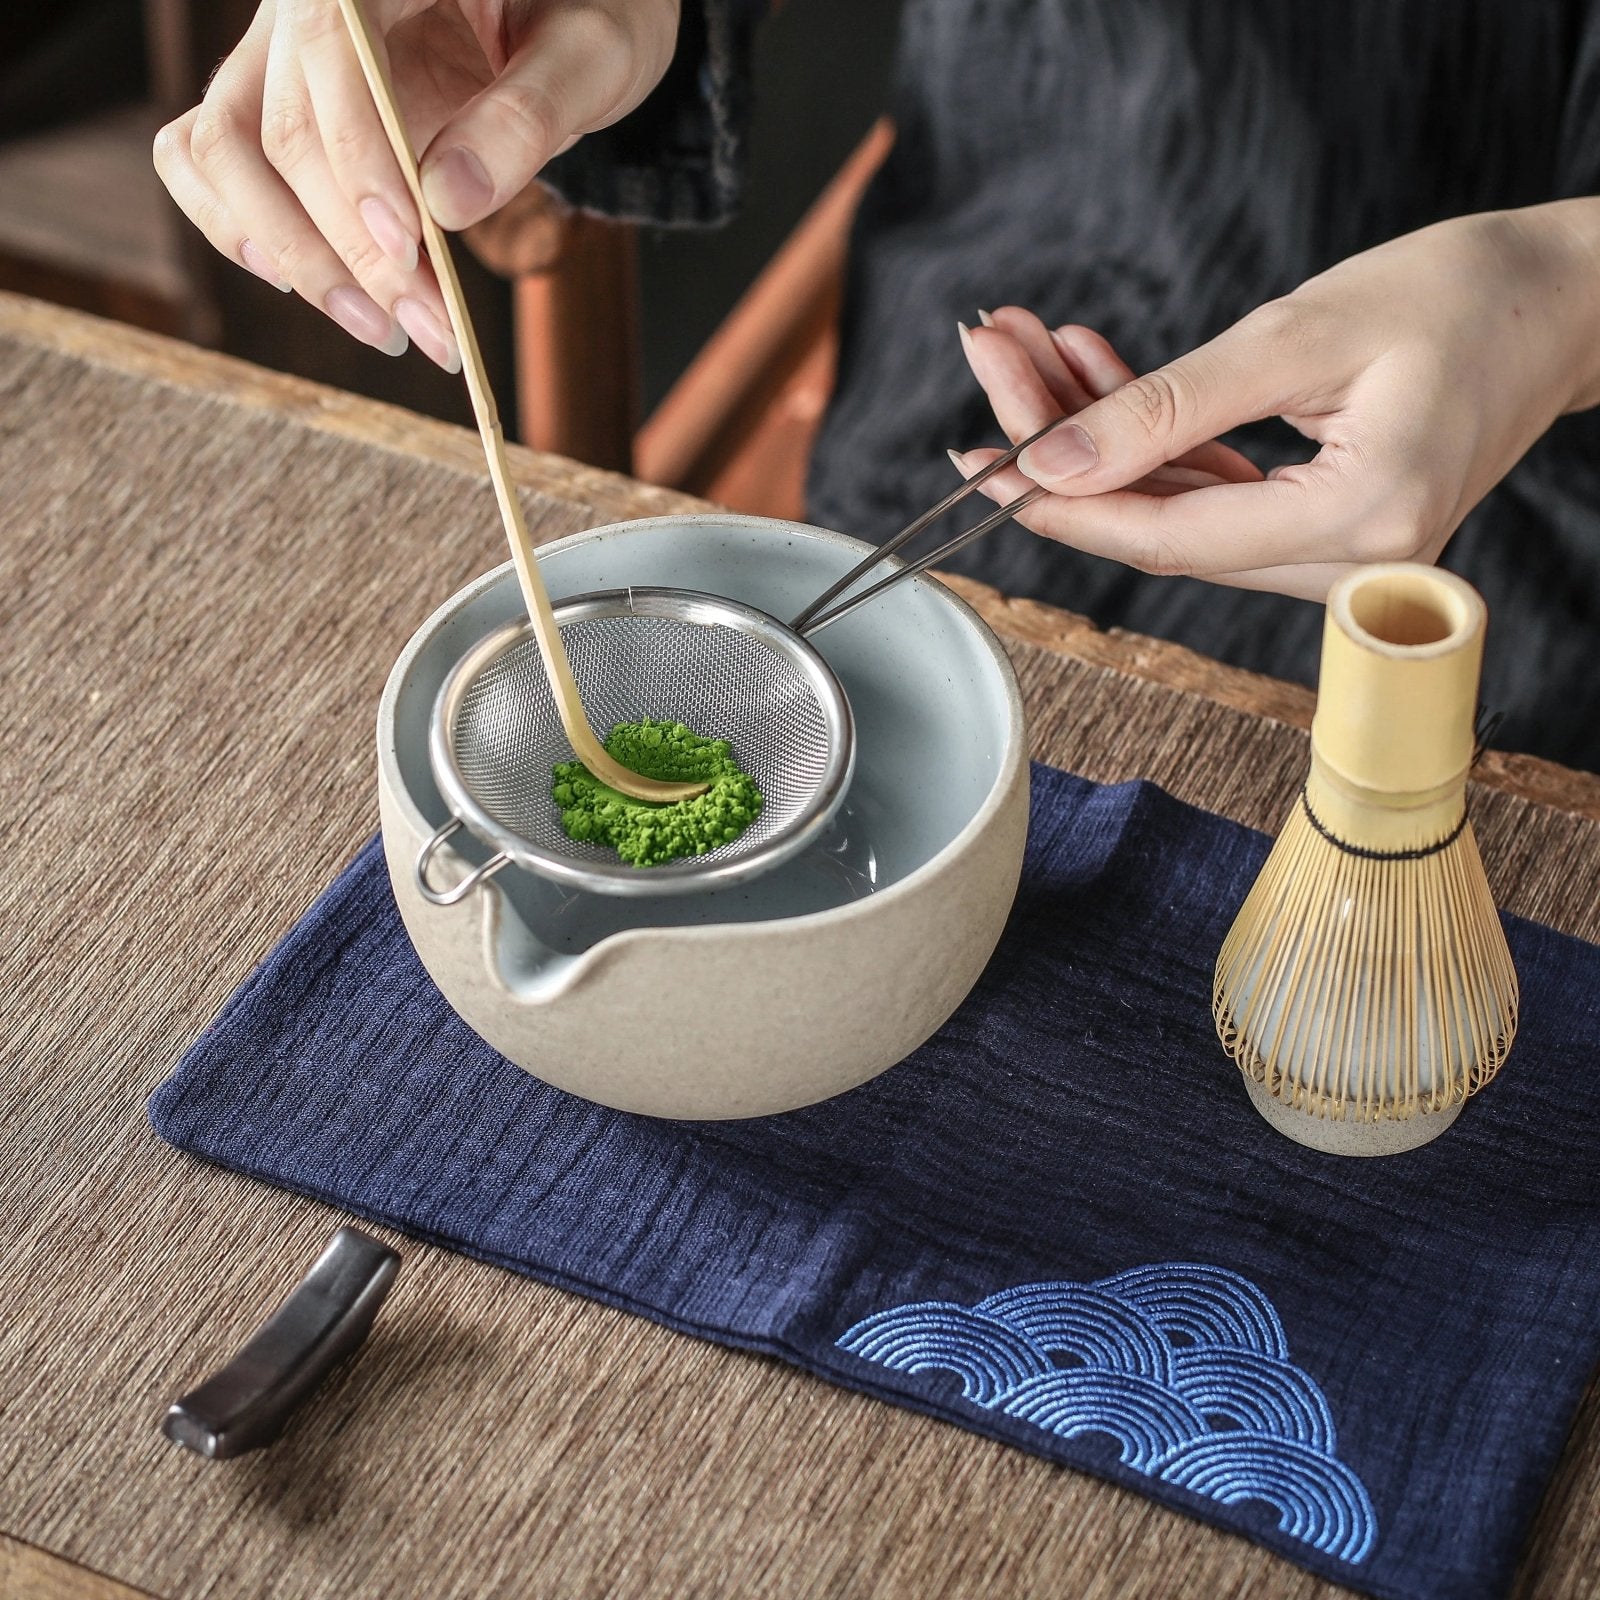  Artcome Traditional Japanese Matcha Tea Set, Matcha